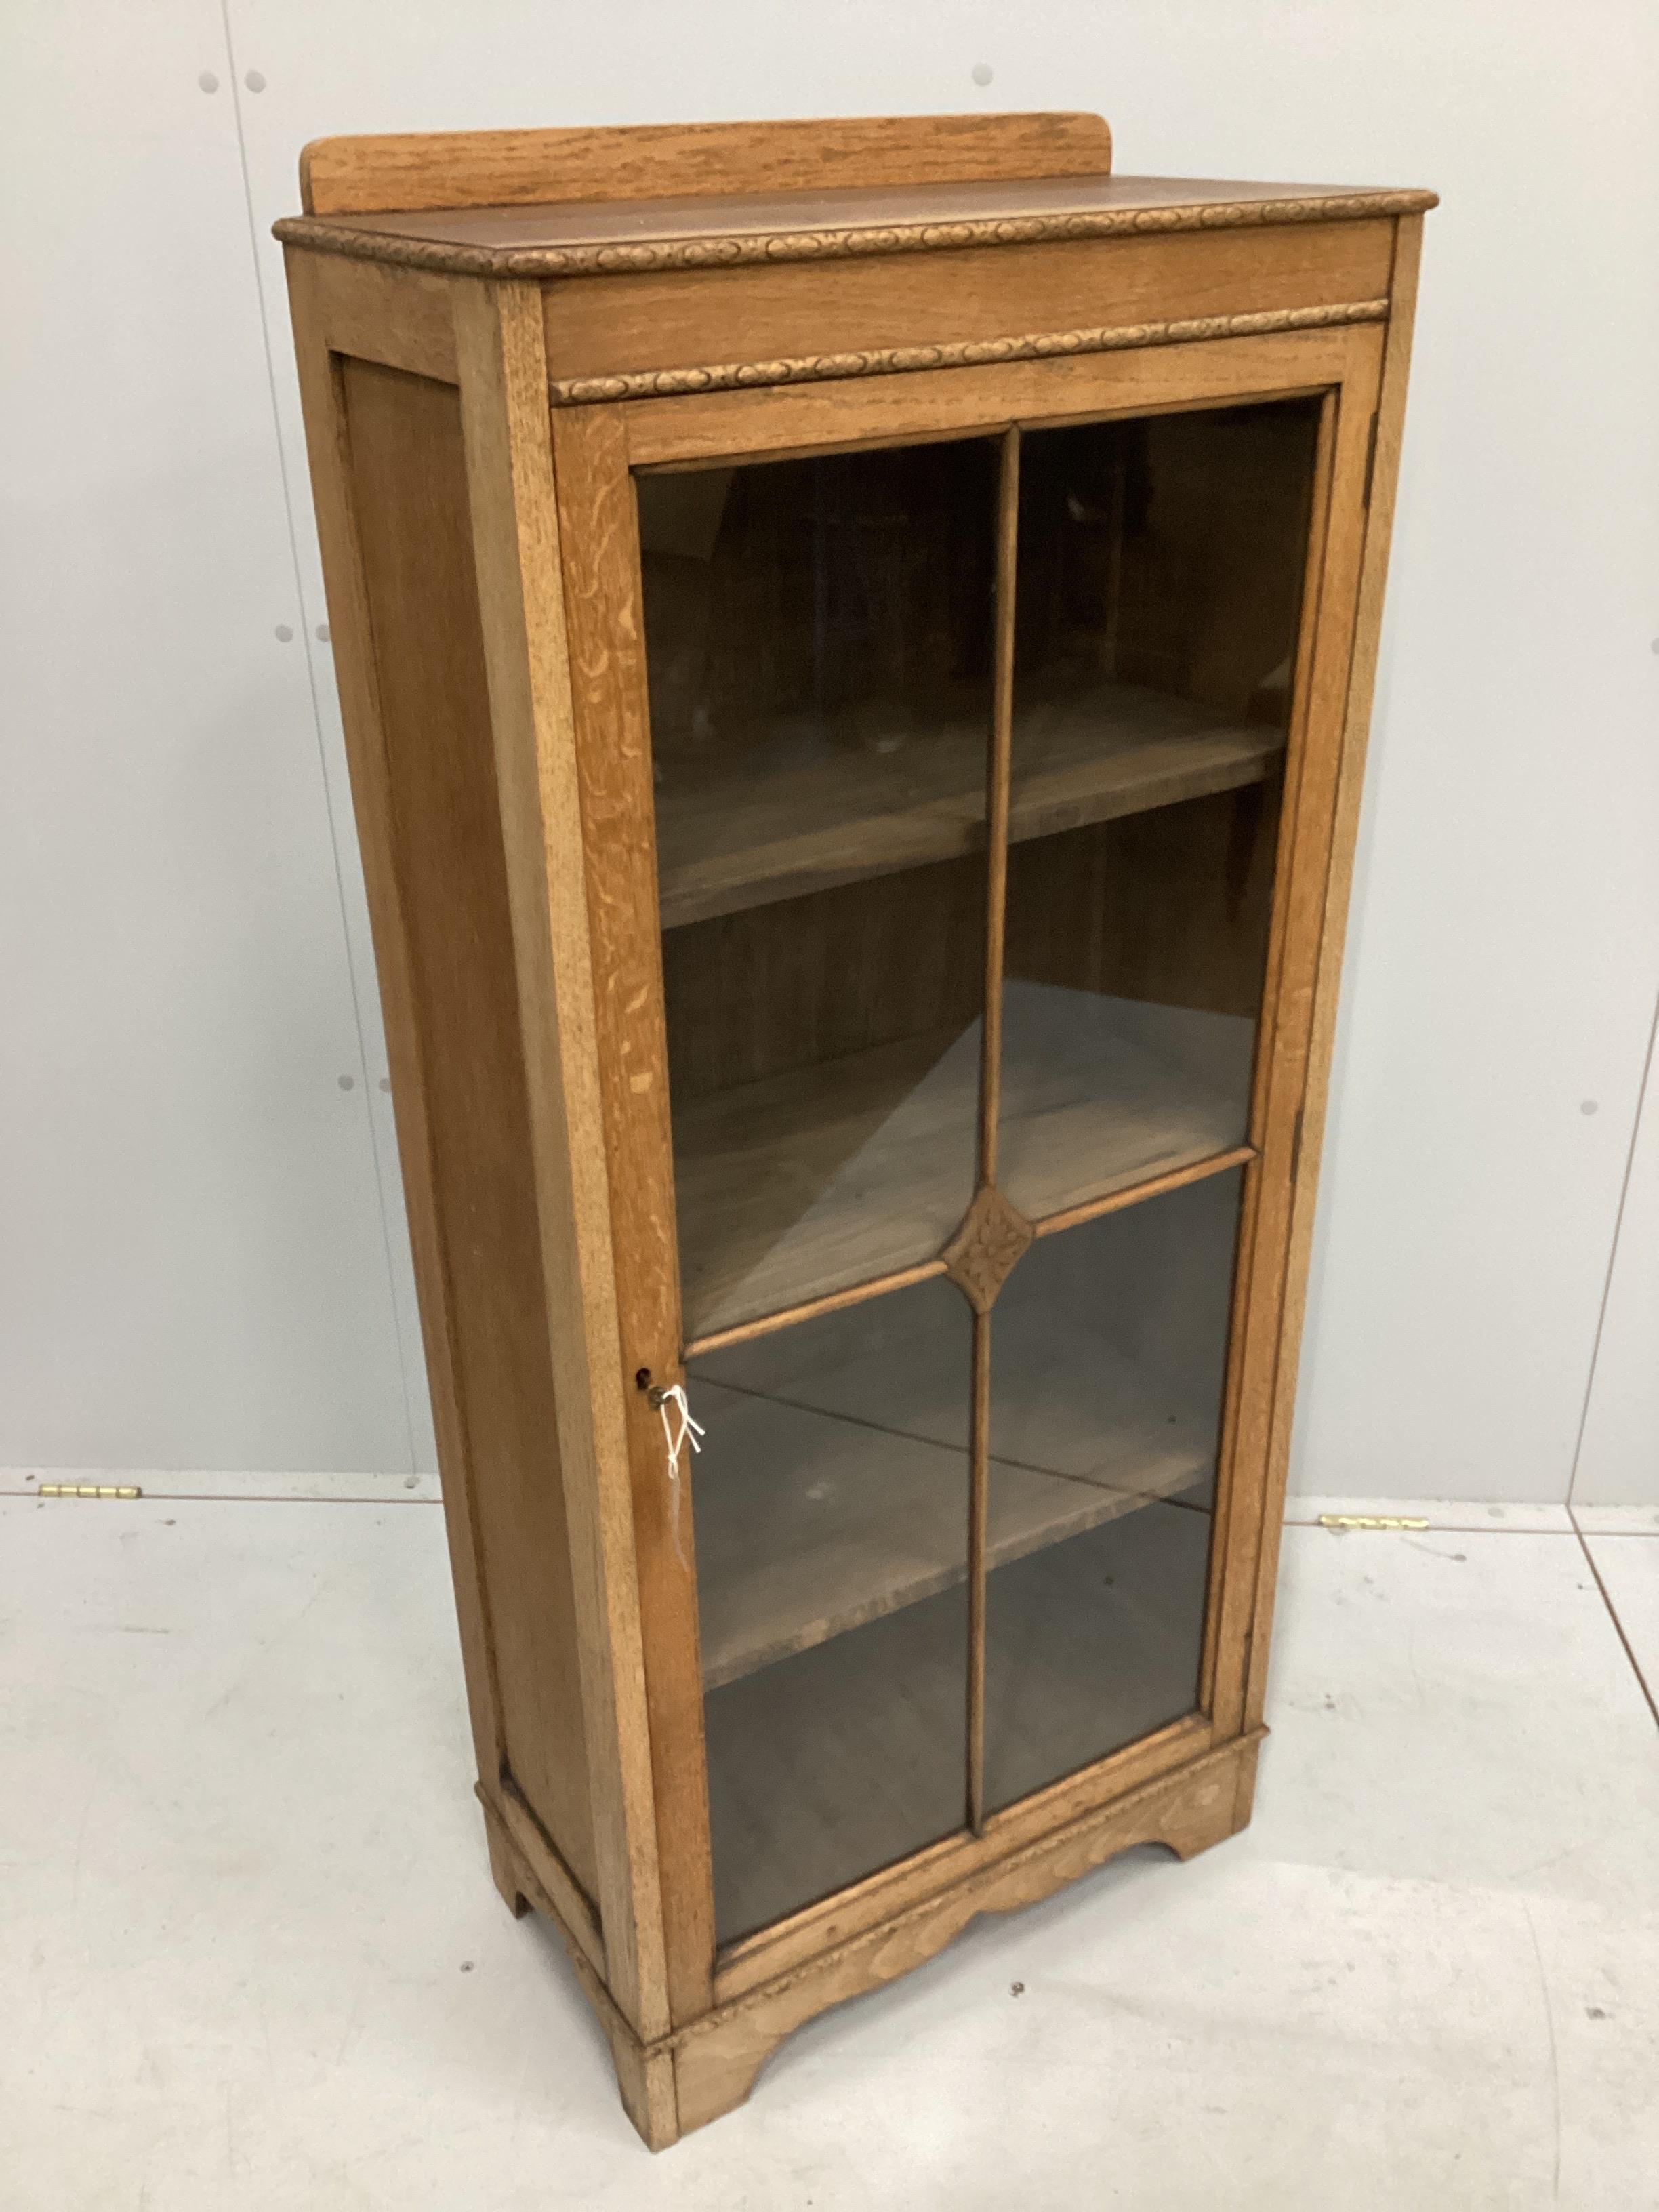 An early 20th century glazed oak narrow bookcase, width 58cm, depth 29cm, height 130cm